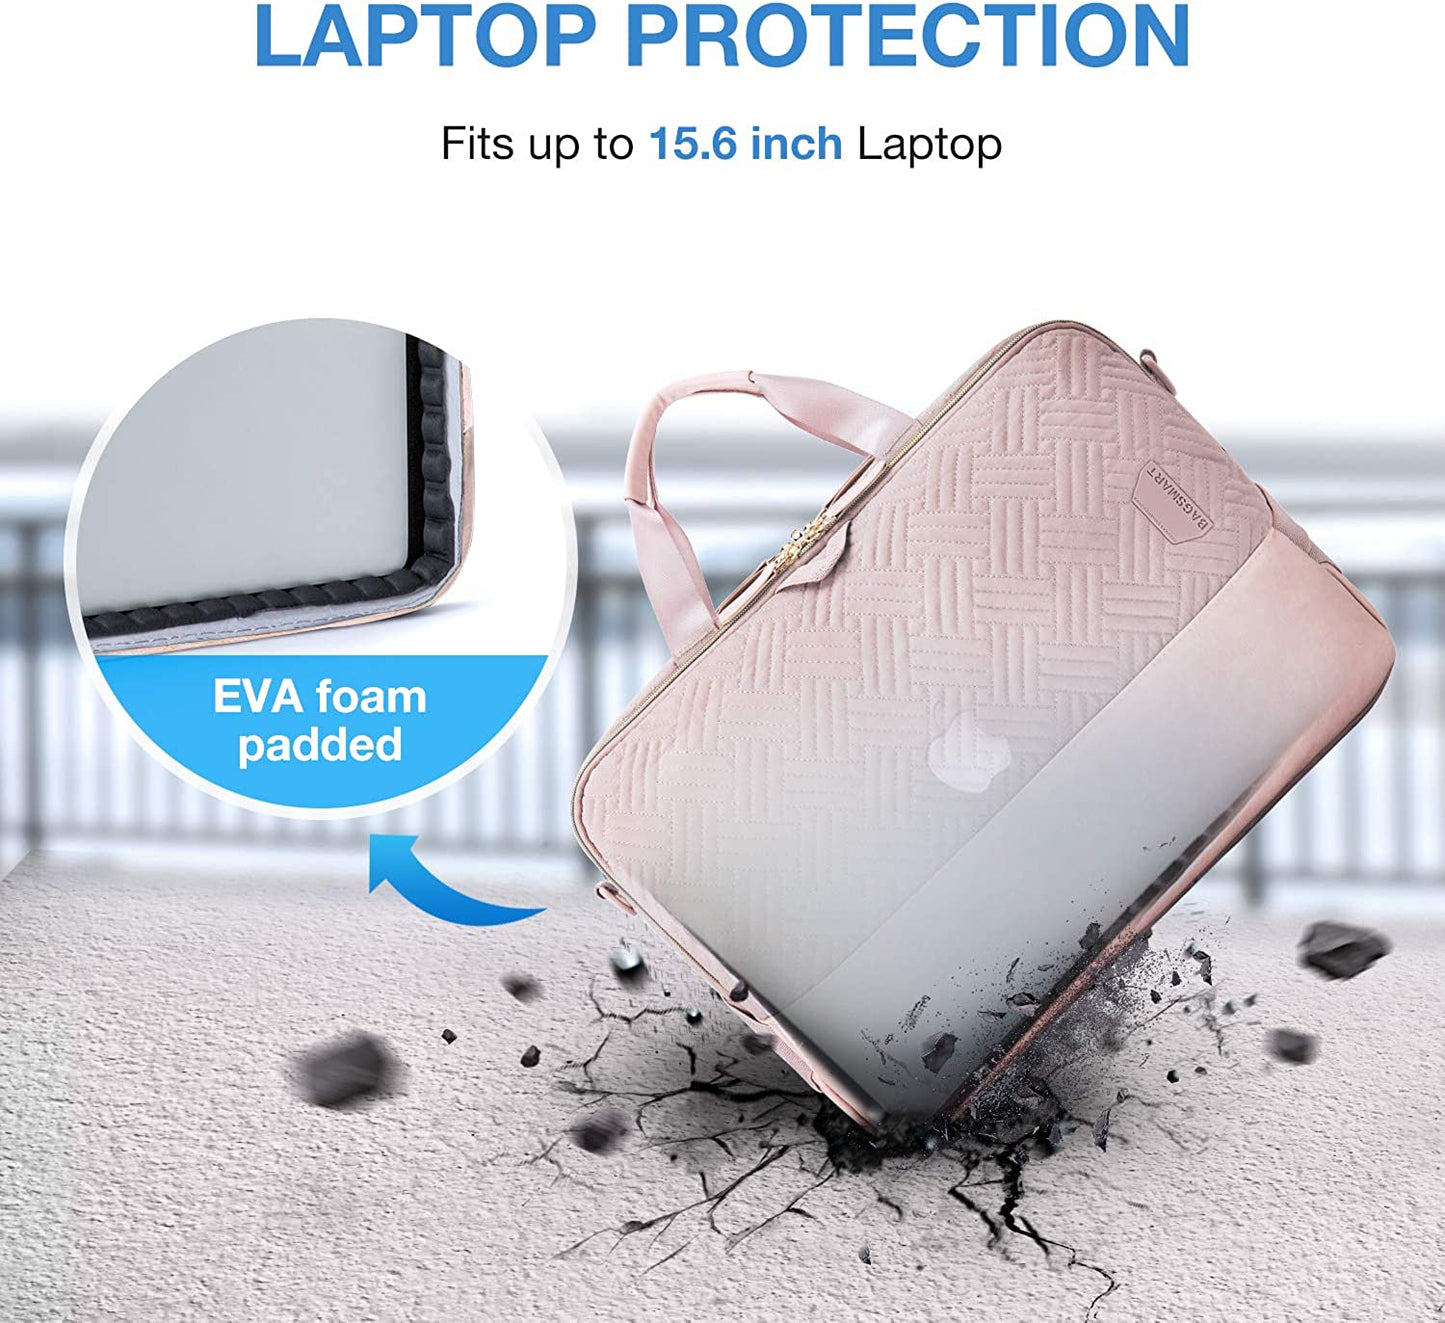 Laptop Bag for Women,BAGSMART 15.6 Inch Laptop Case Computer Bag Briefcase for Ladies